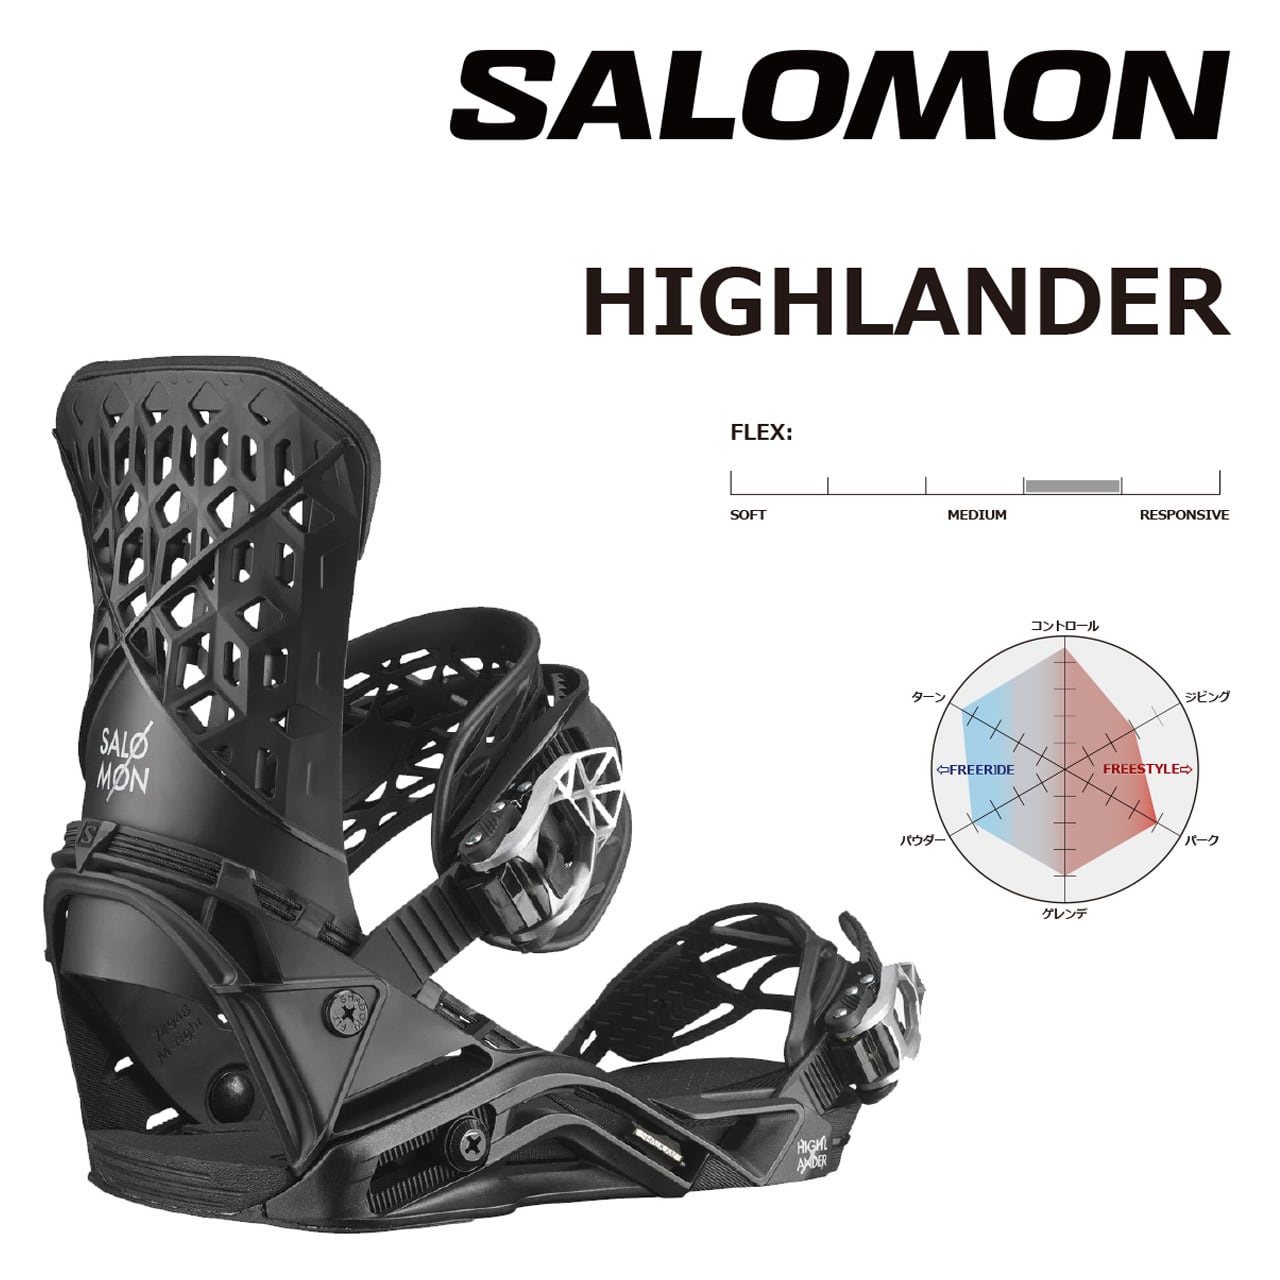 SALOMON HIGHLANDER (サロモン ハイランダー)-silversky-lifesciences.com